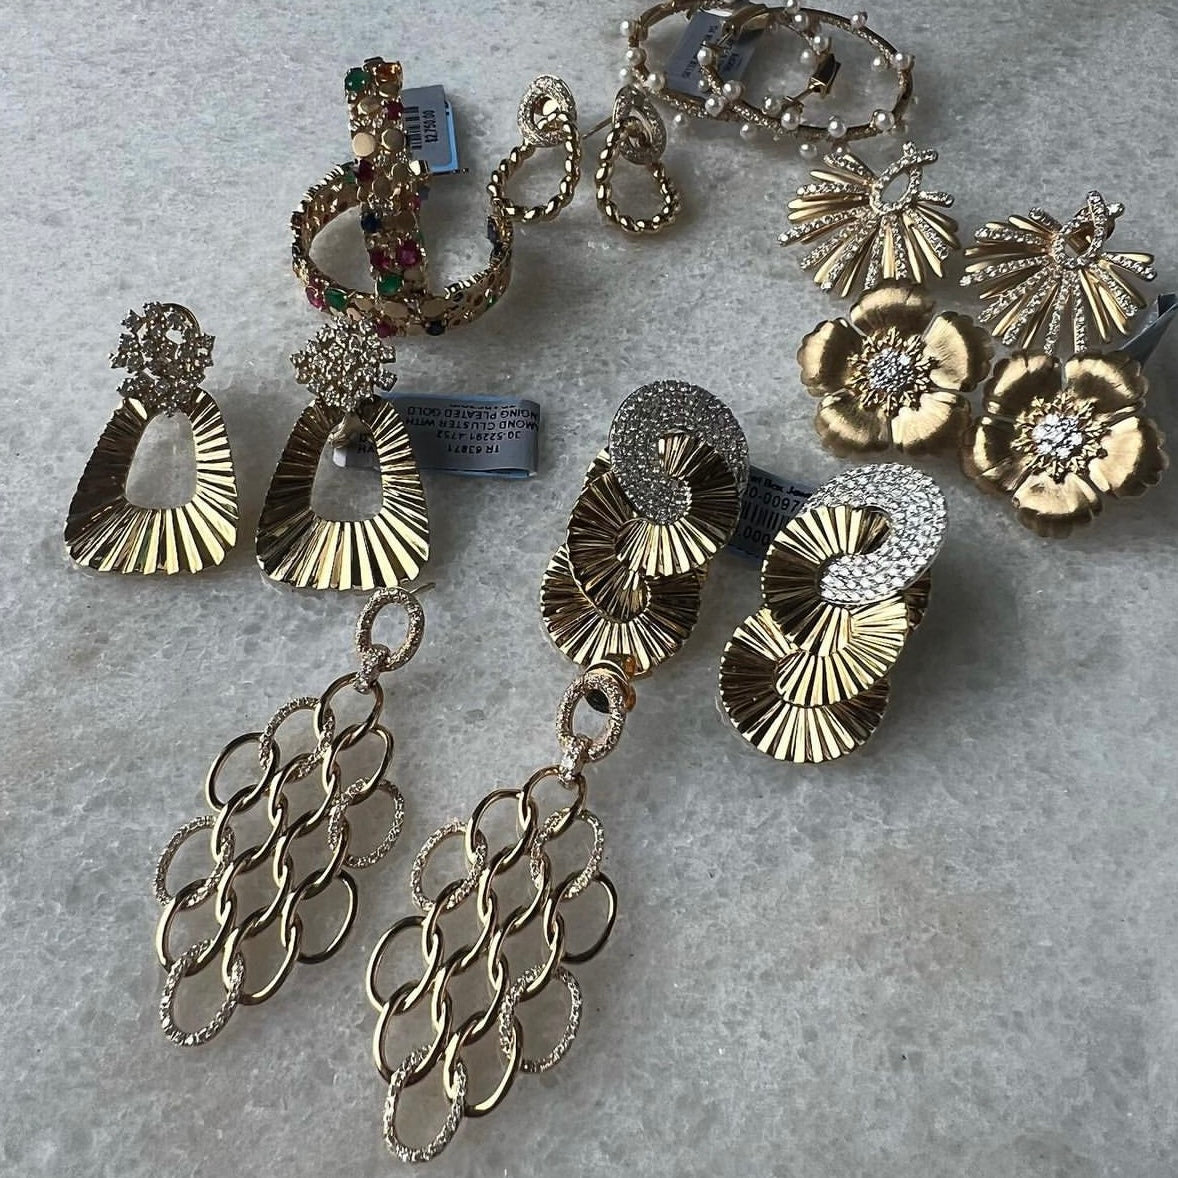 Brushed Gold 5 Petal & Diamond Center Earrings